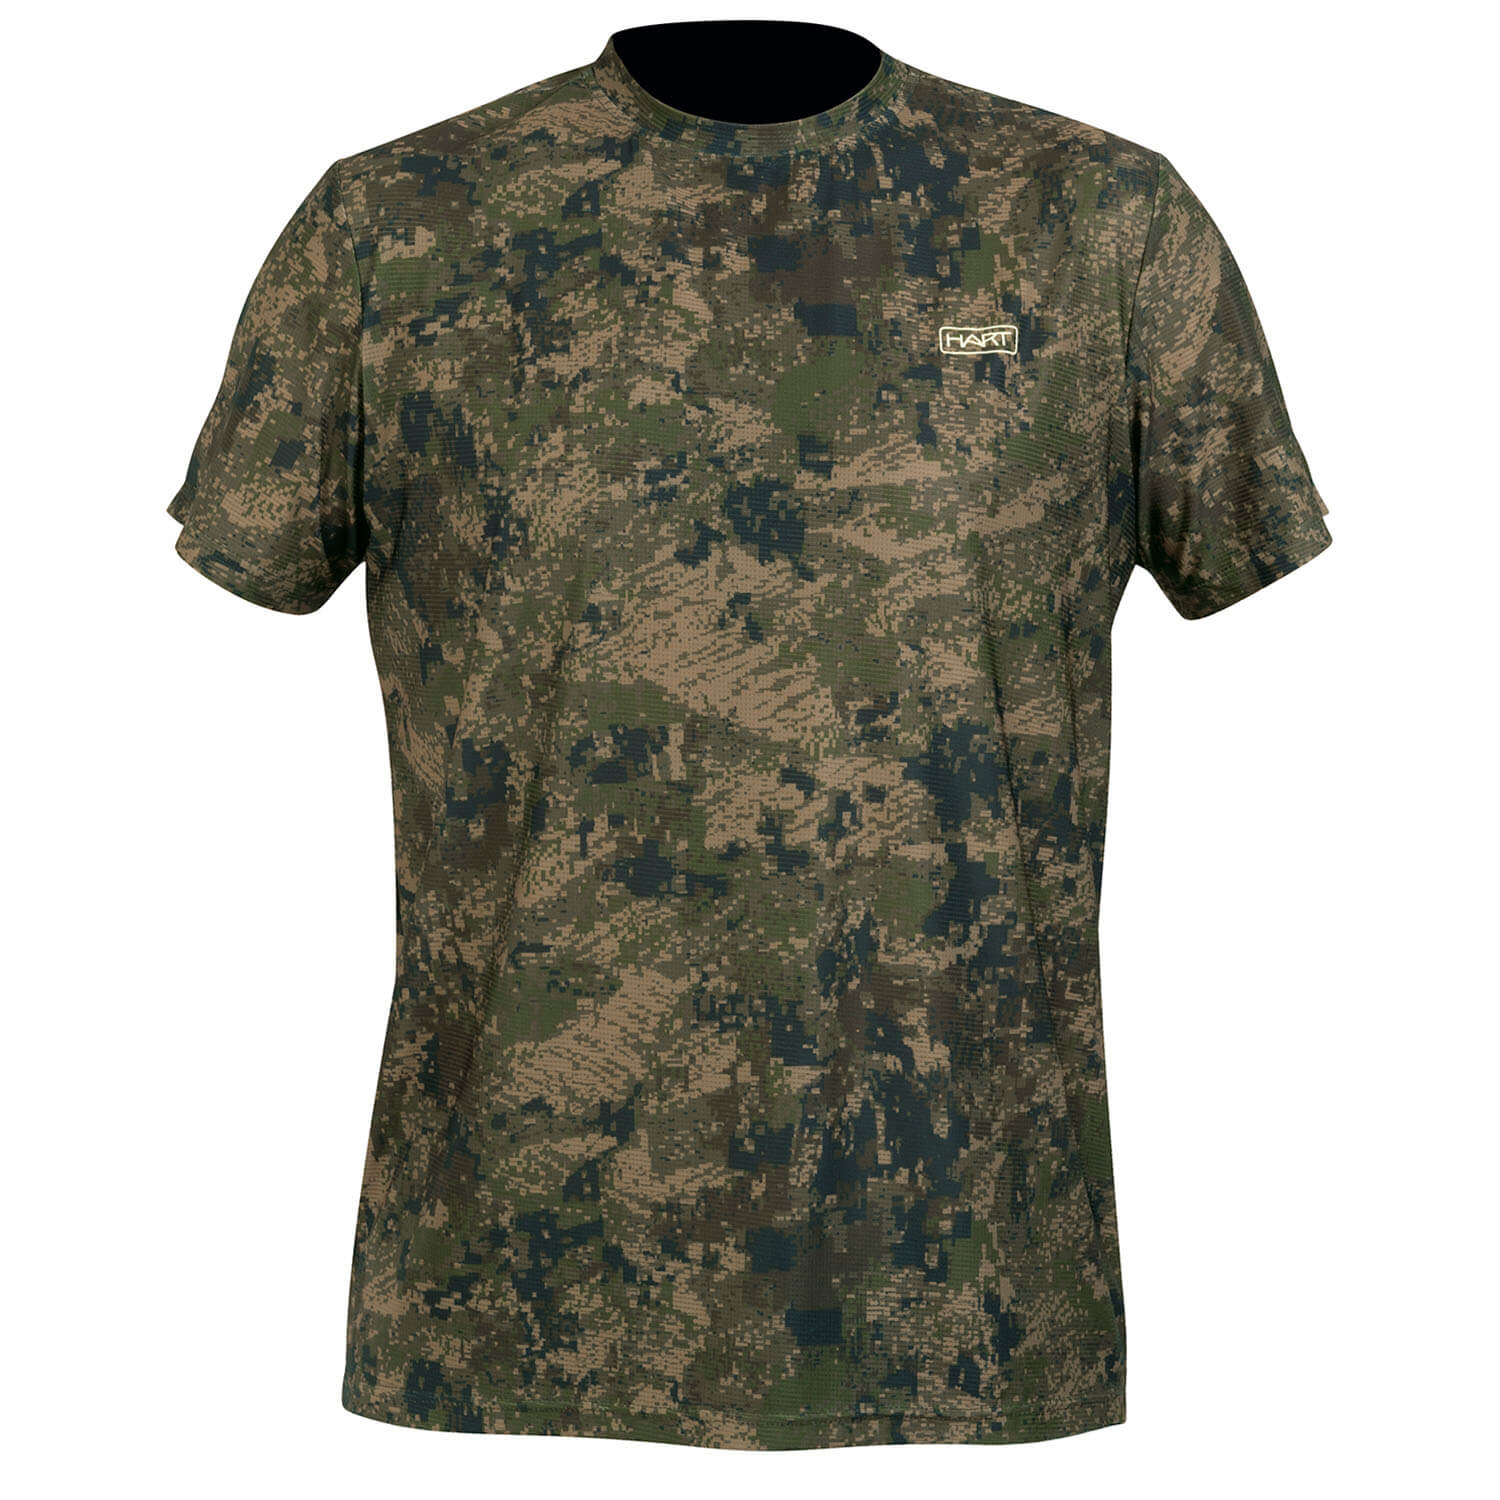  Hart T-shirt Ural-TS - Camouflageshirts